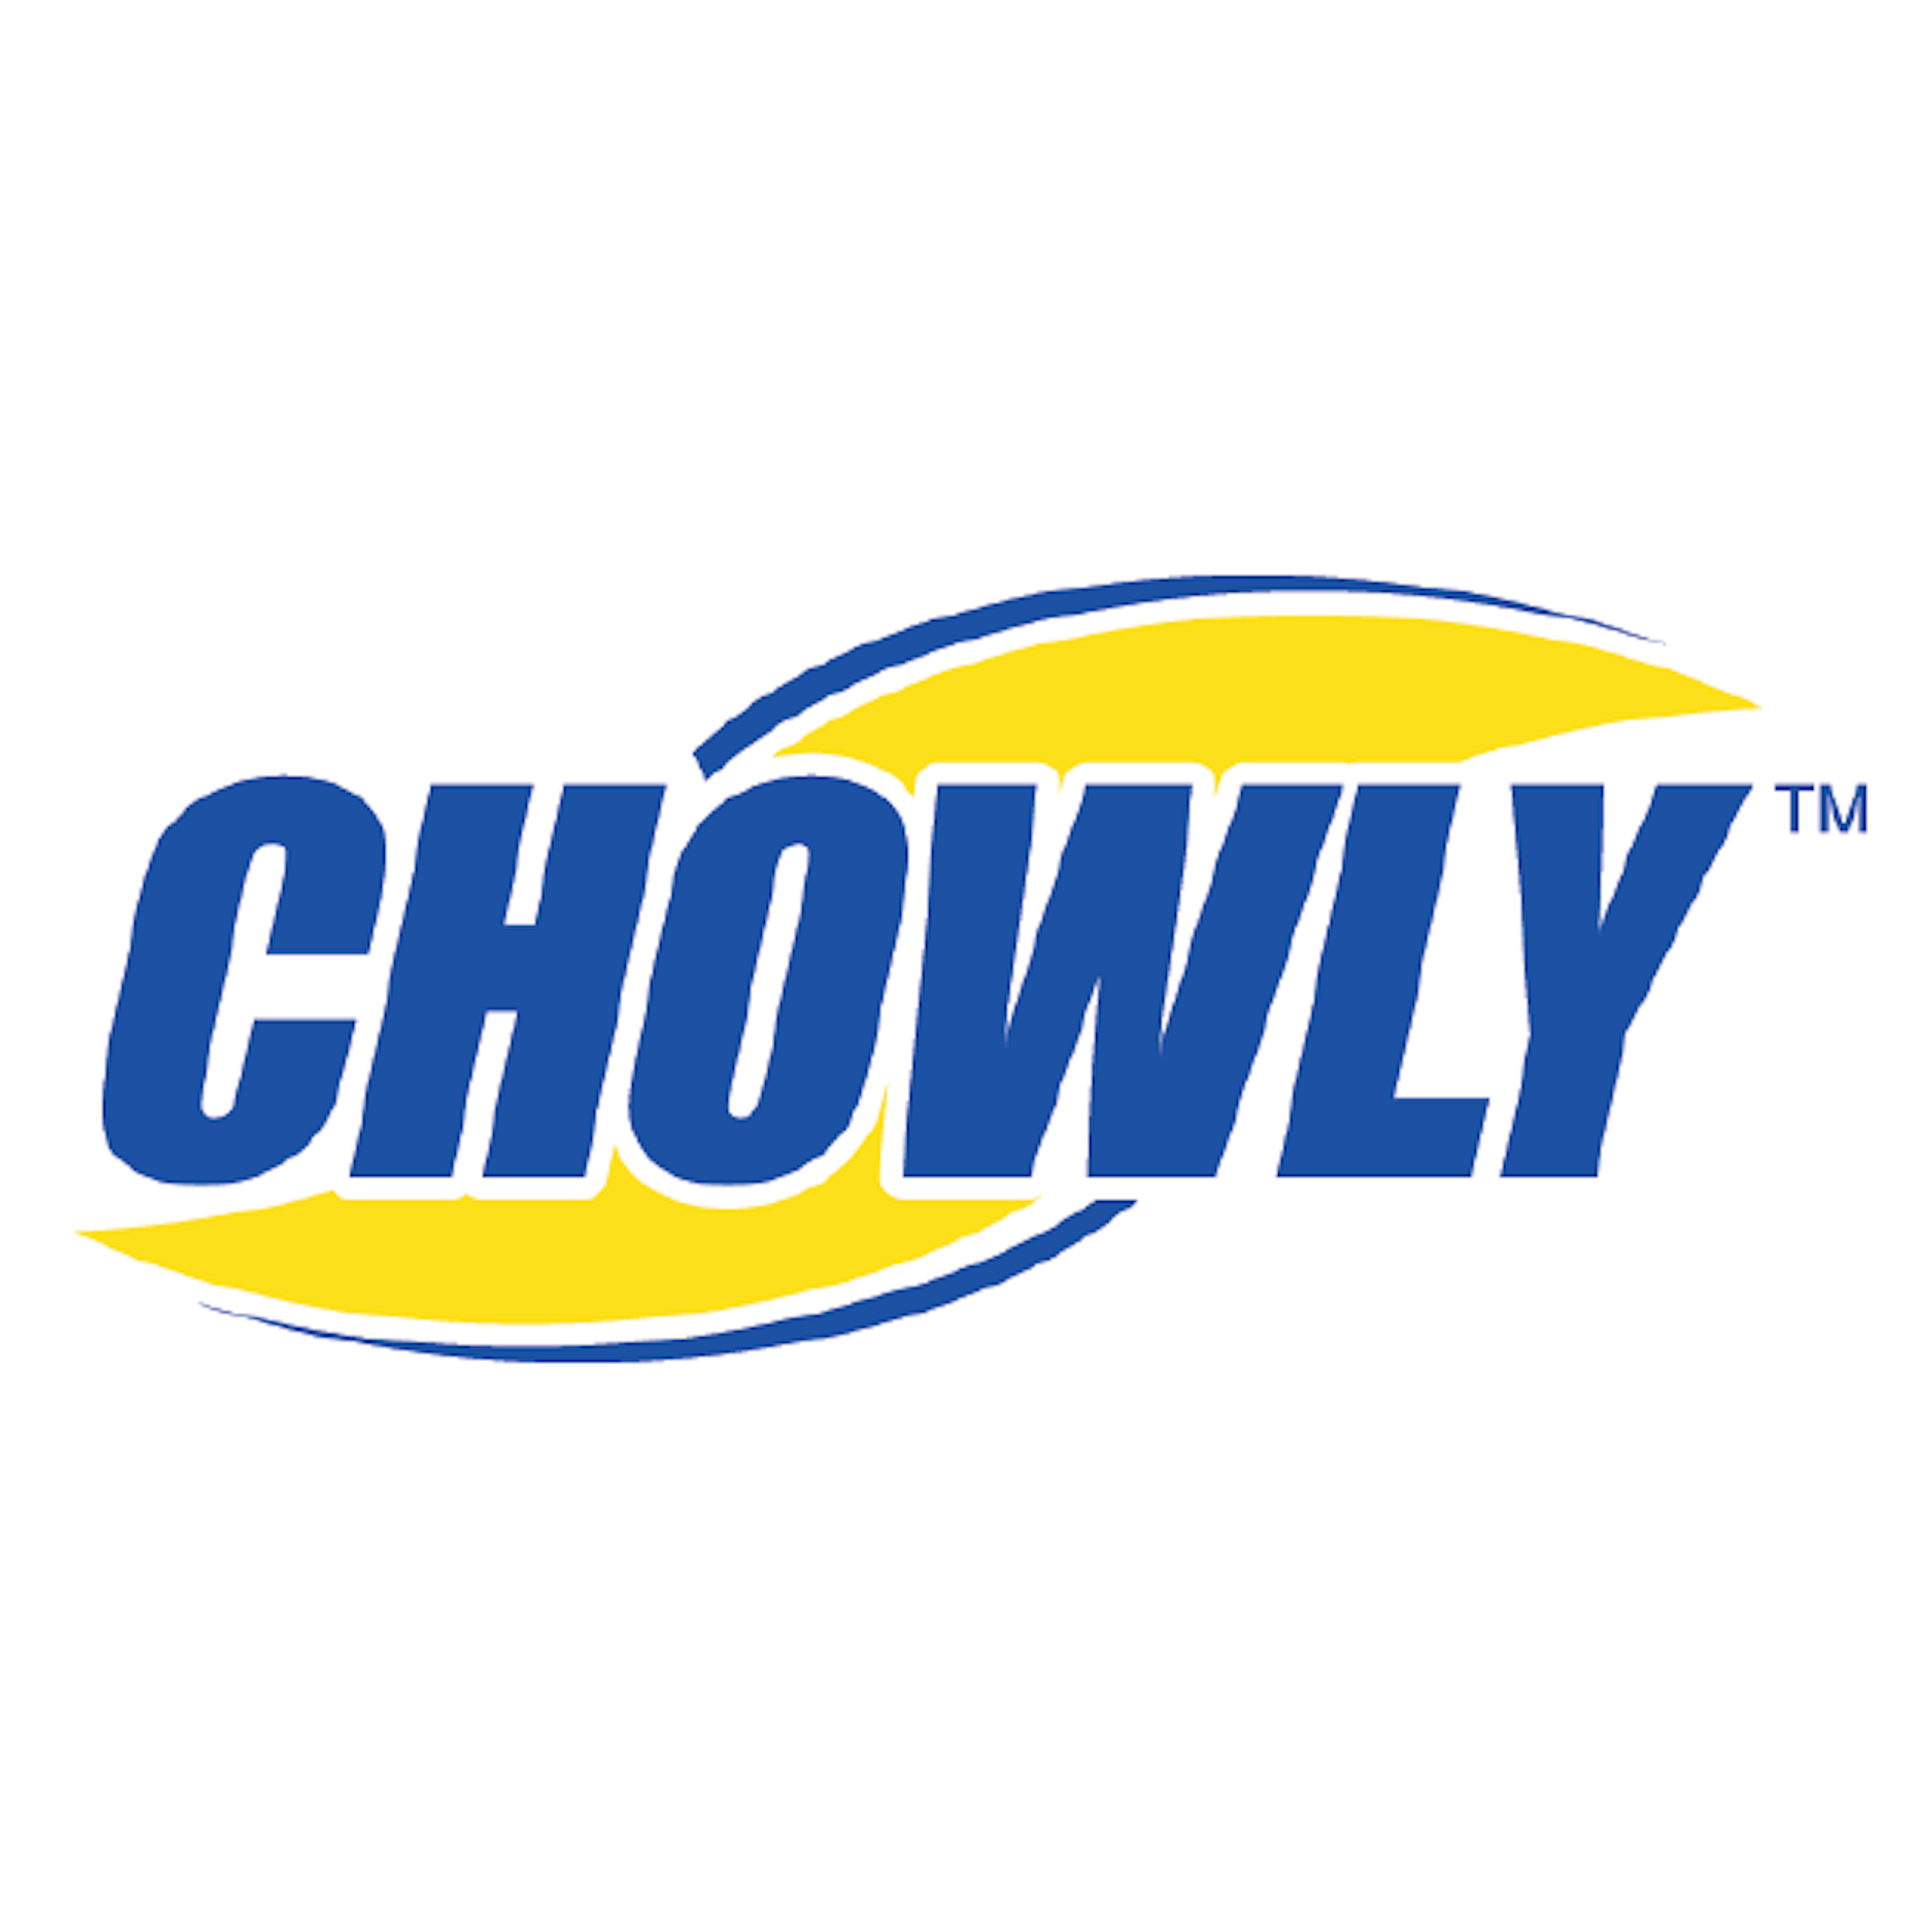 Chowly Logo